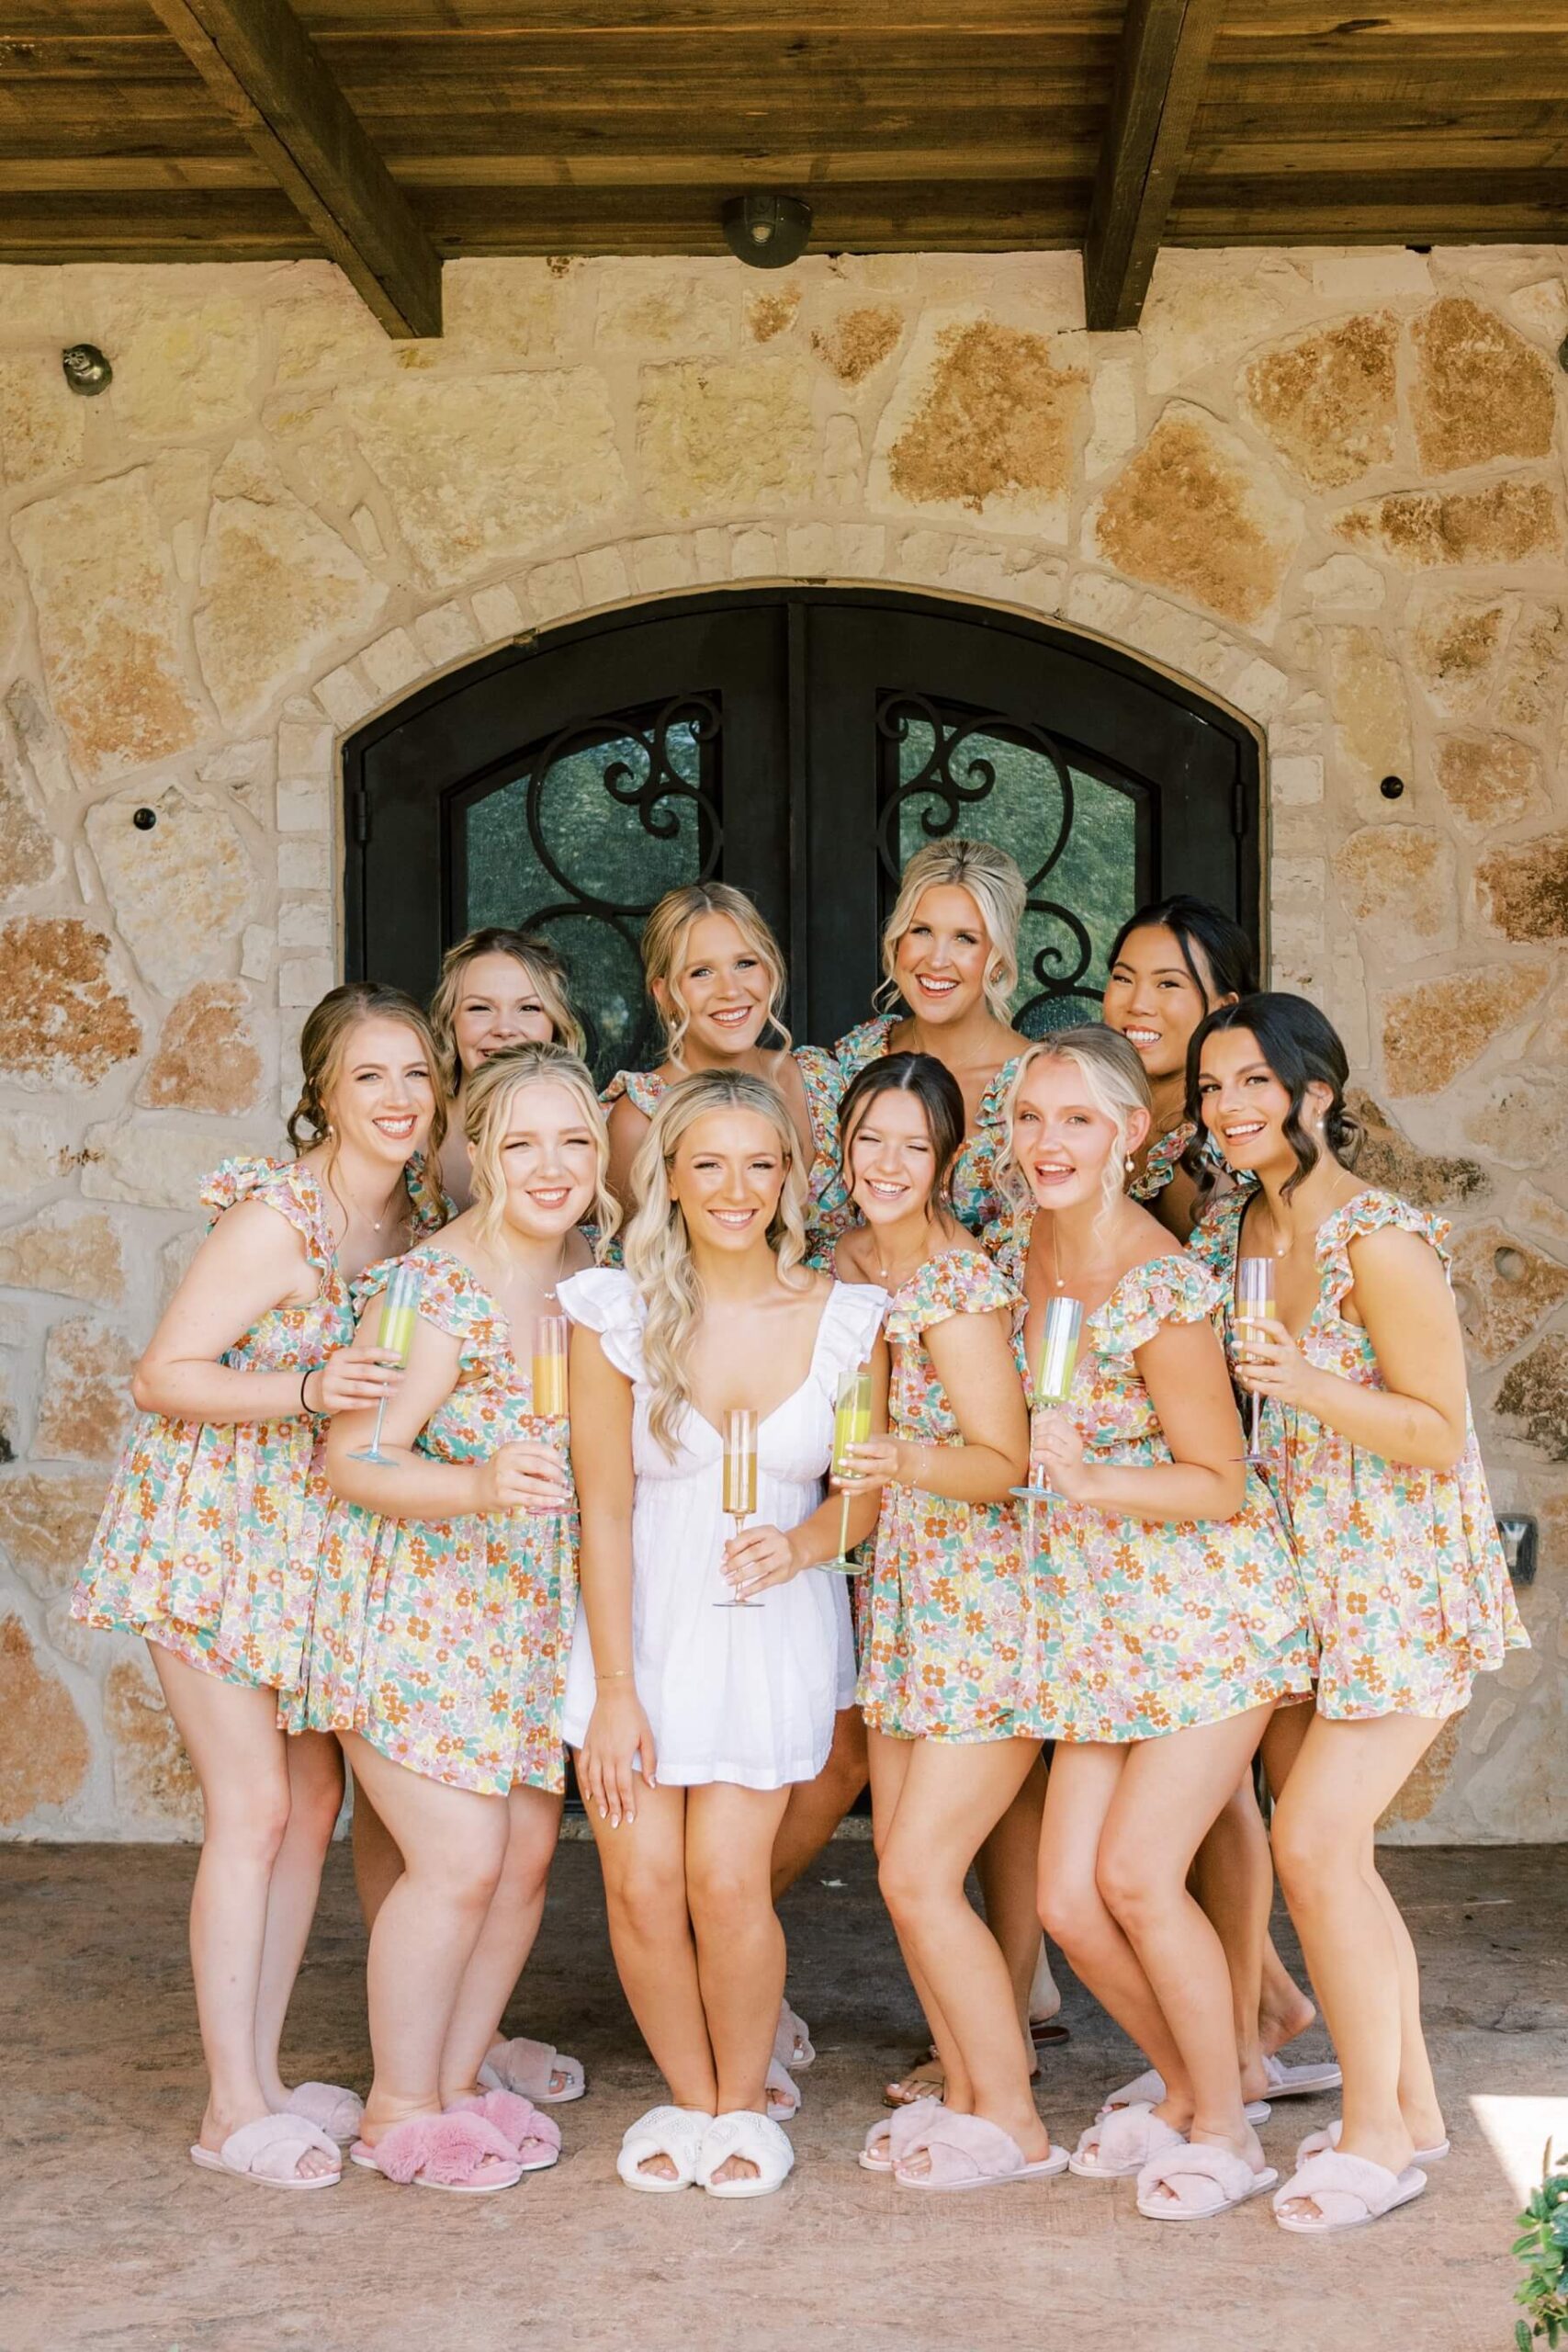 Bride with bridesmaids in floral pajamas holding mimosas 